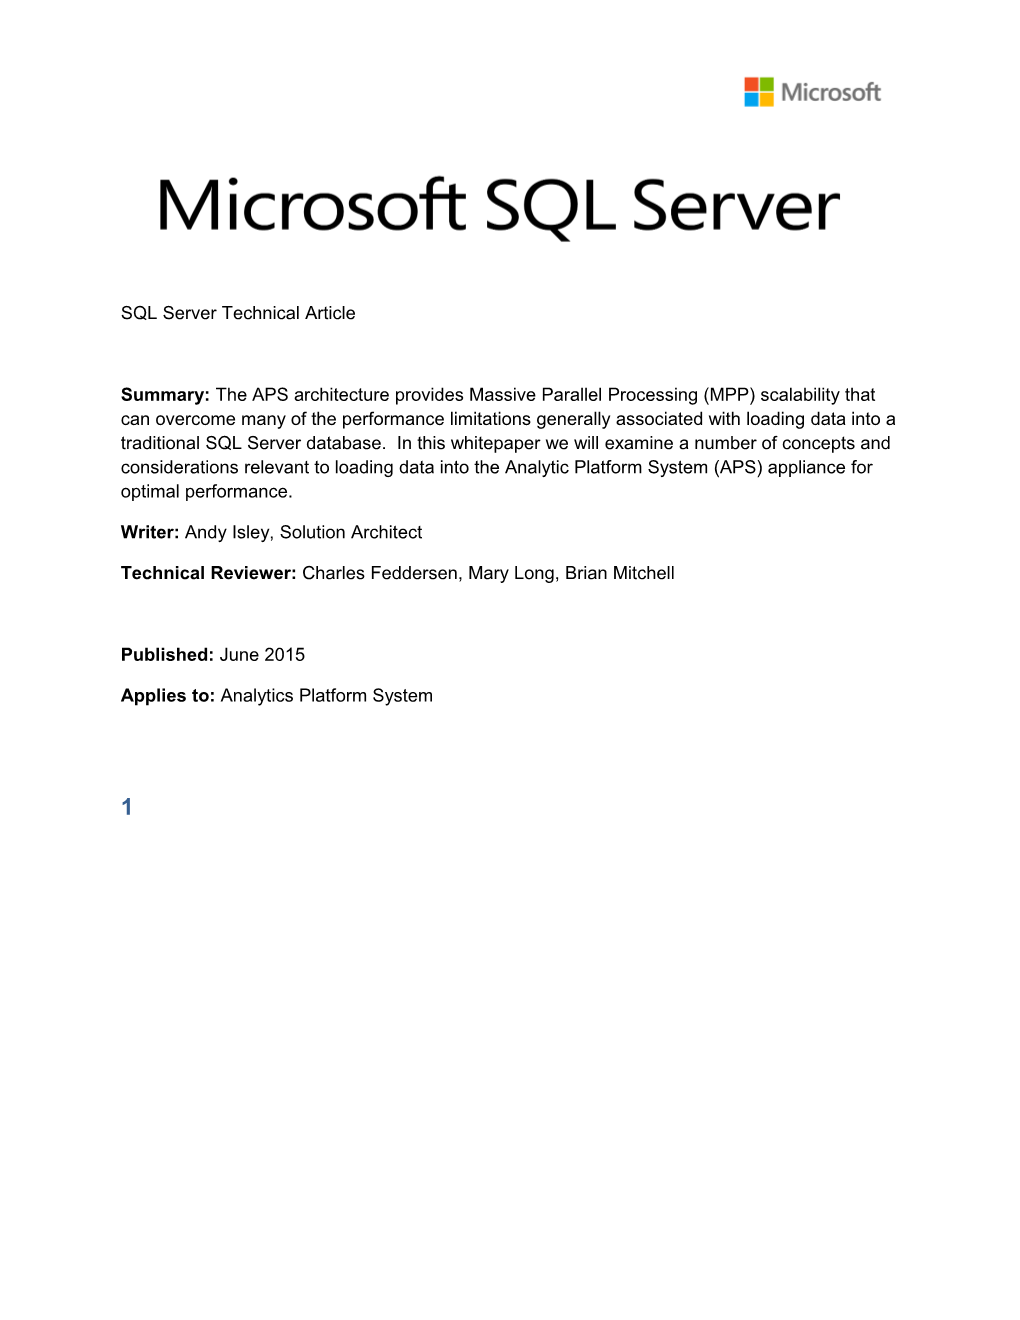 SQL Server Technical Article